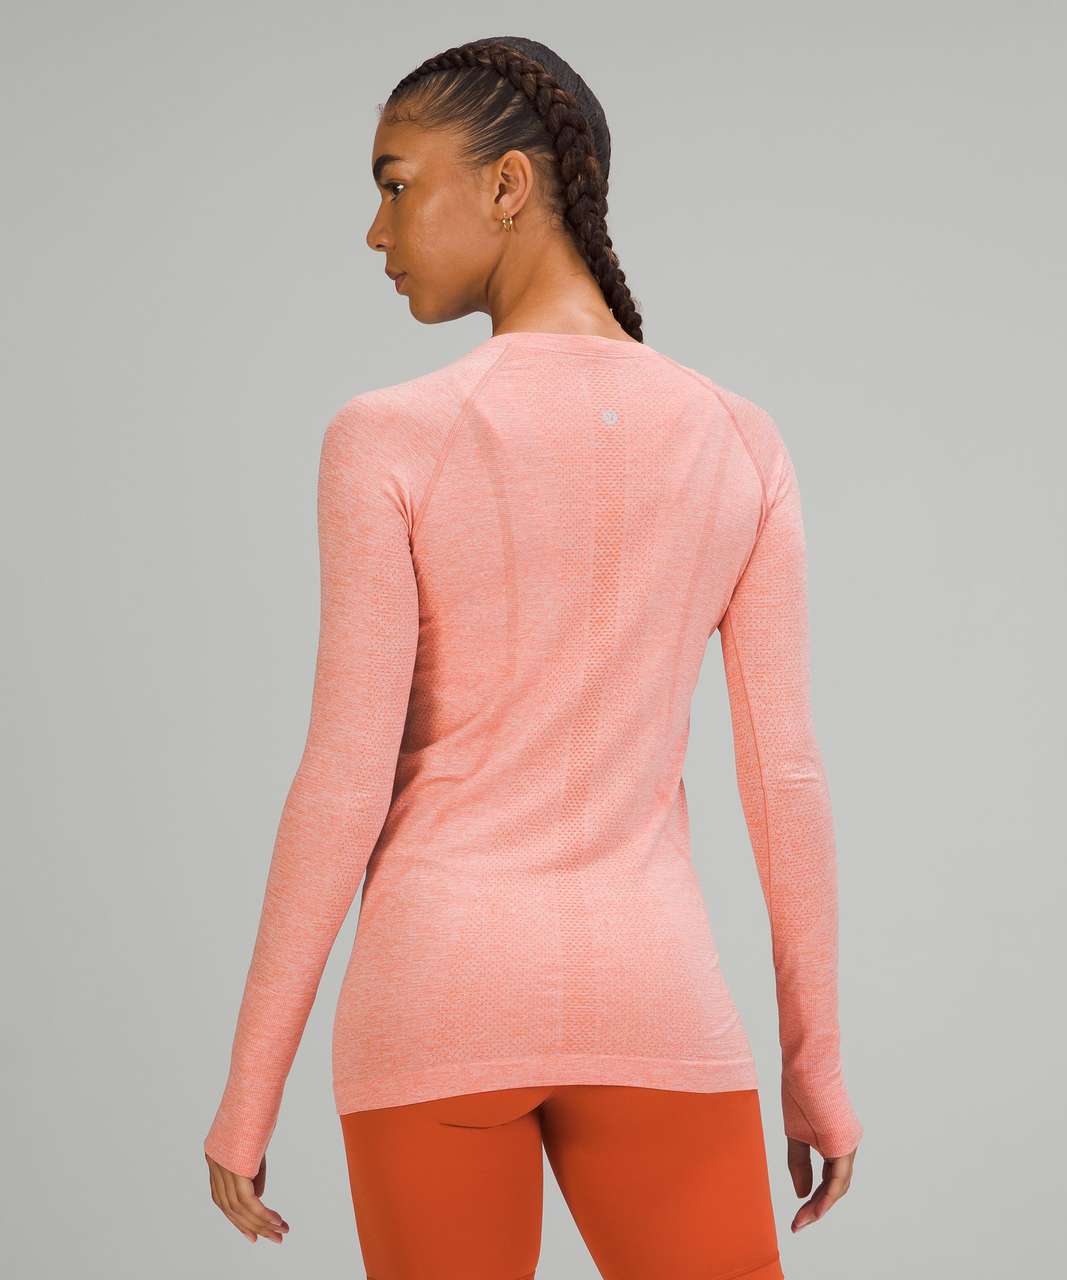 Lululemon Swiftly Tech Long Sleeve Shirt 2.0 - Pink Savannah / Pink Mist